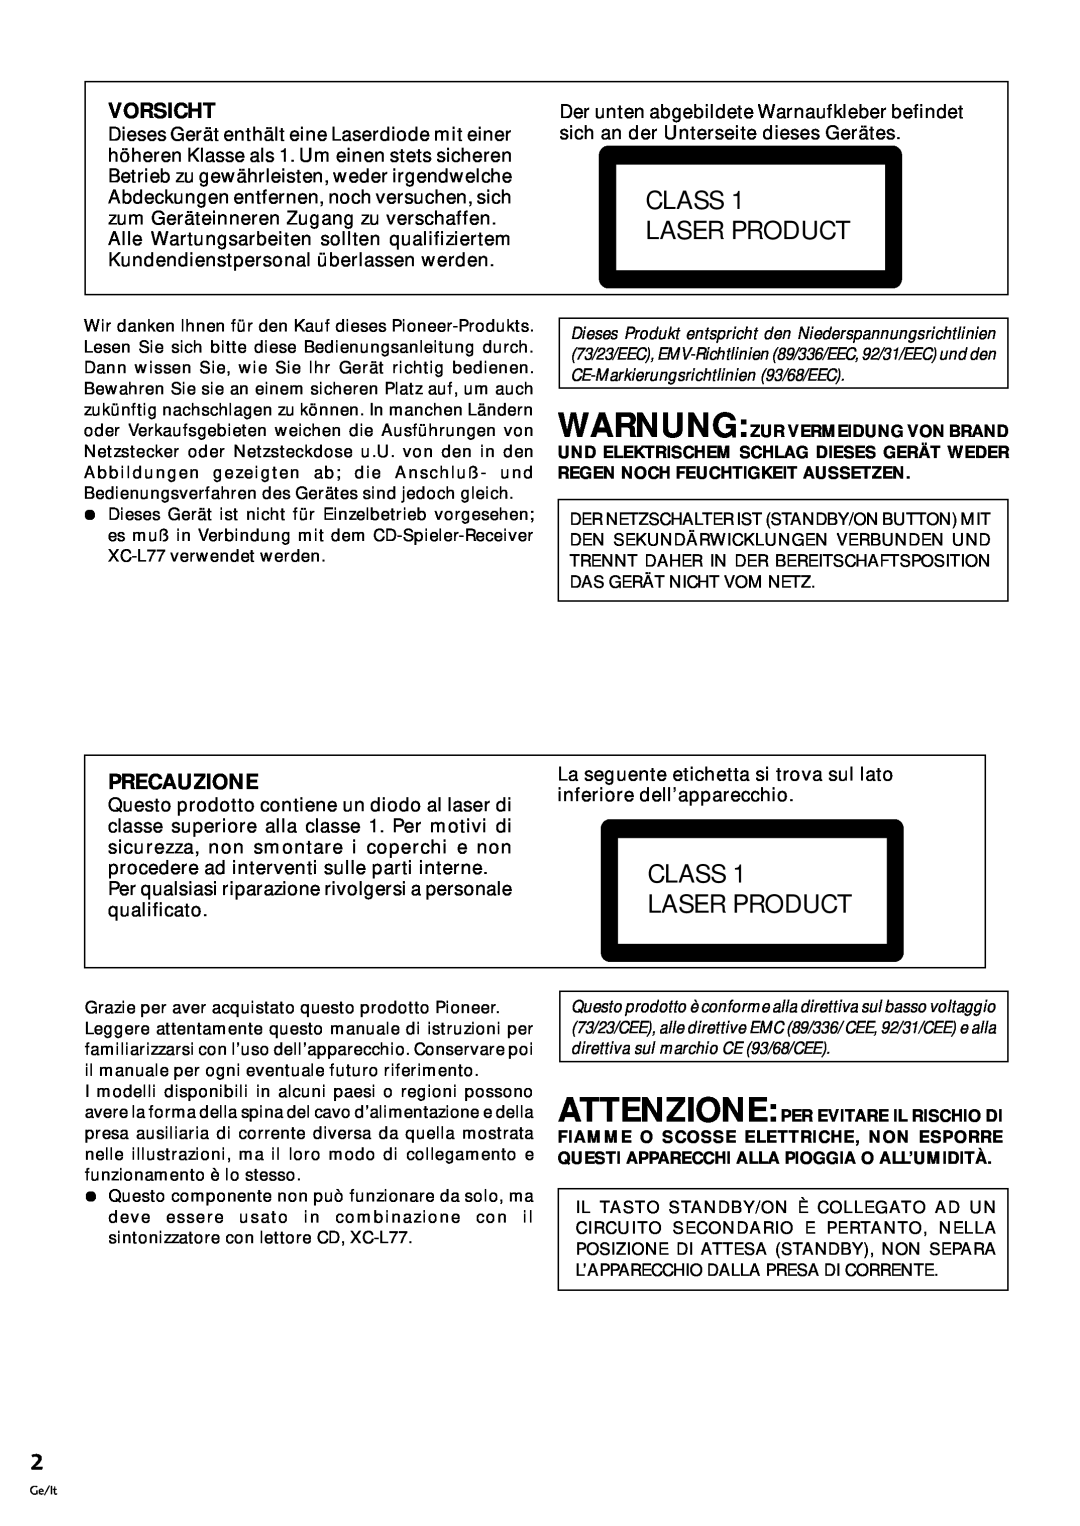 Pioneer MJ-L77 operating instructions Class Laser Product, Vorsicht, Precauzione, Ge/It 